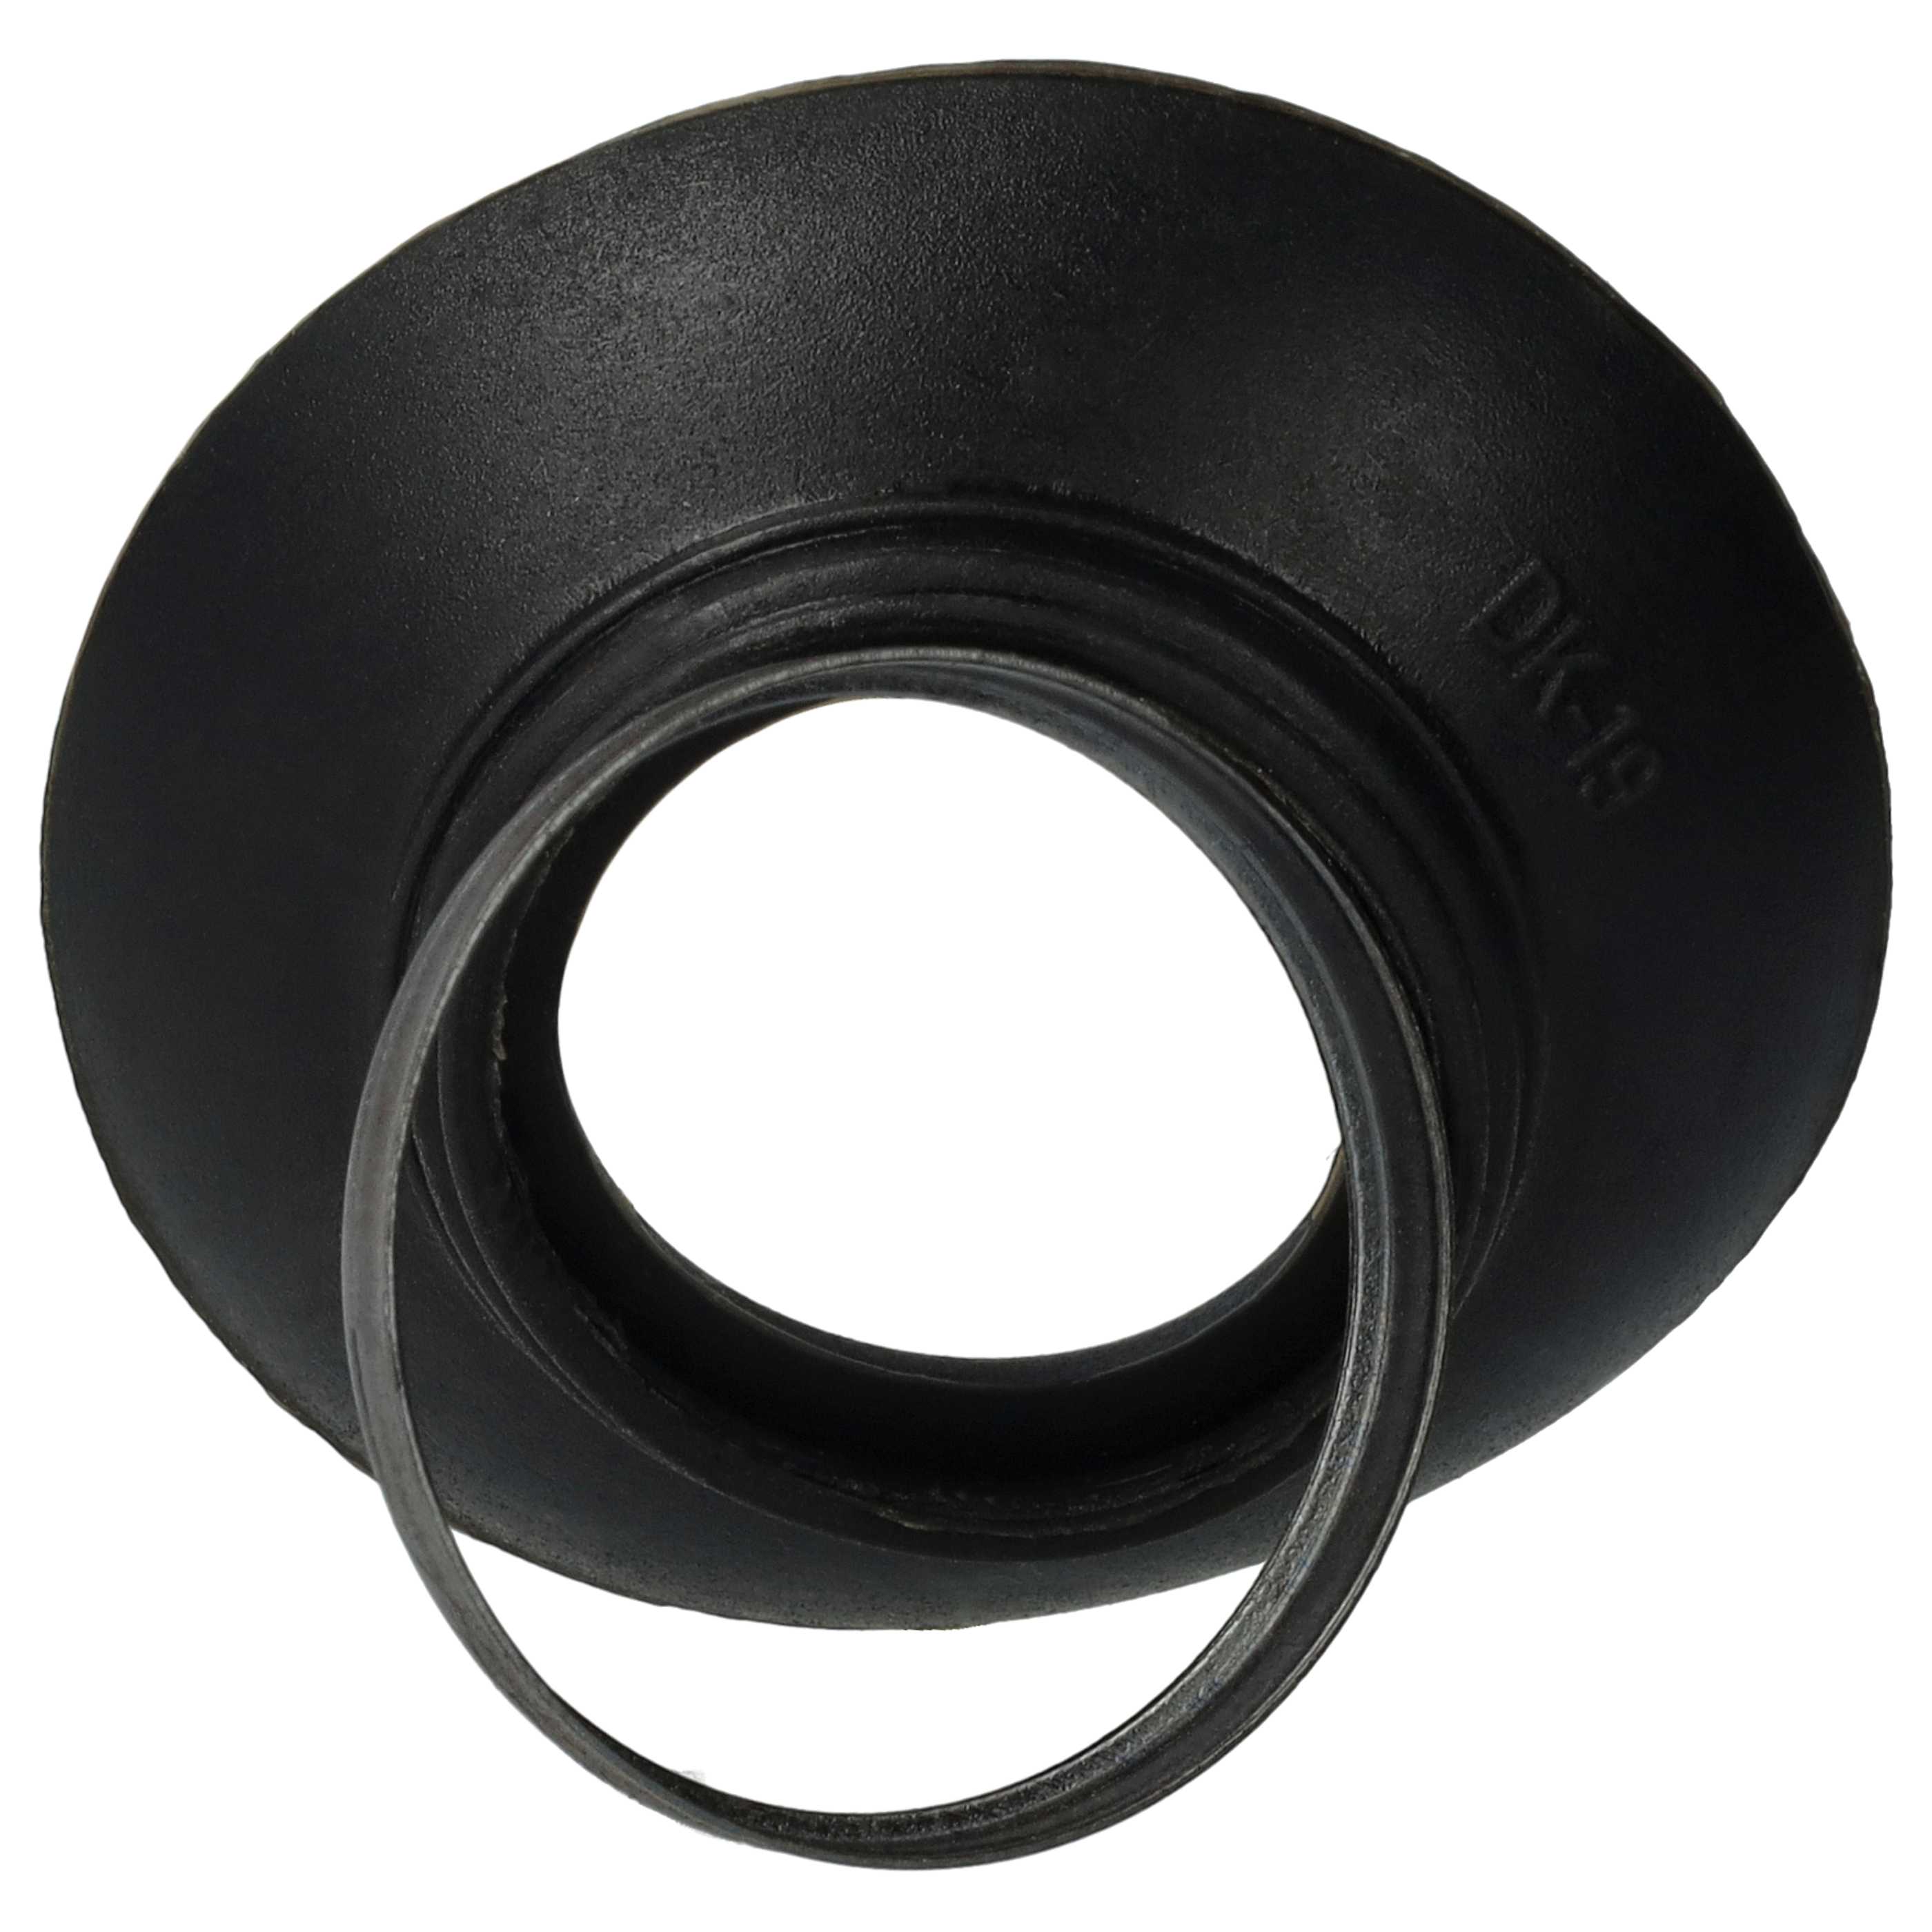 Eye Cup replaces Nikon DK-19 for Nikon D810a etc., Plastic 